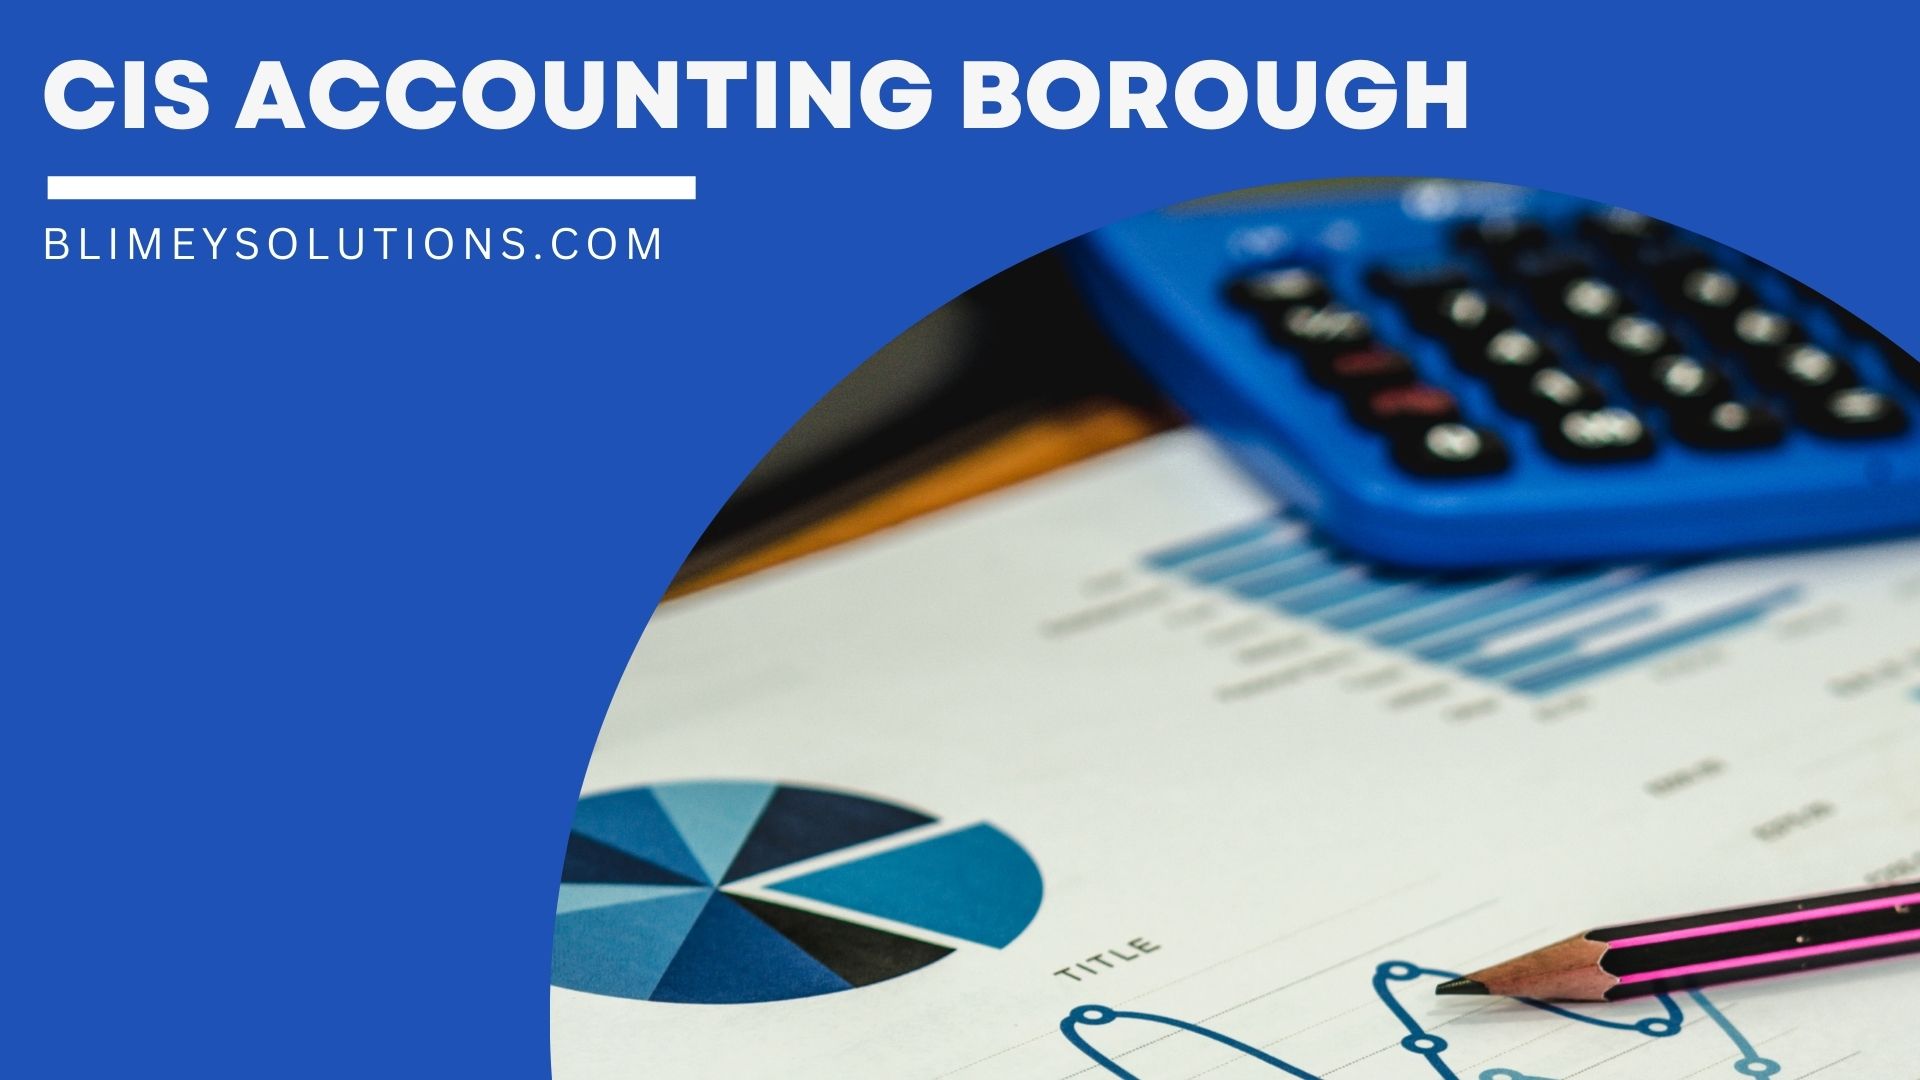 CIS Accounting in Borough SE1 London